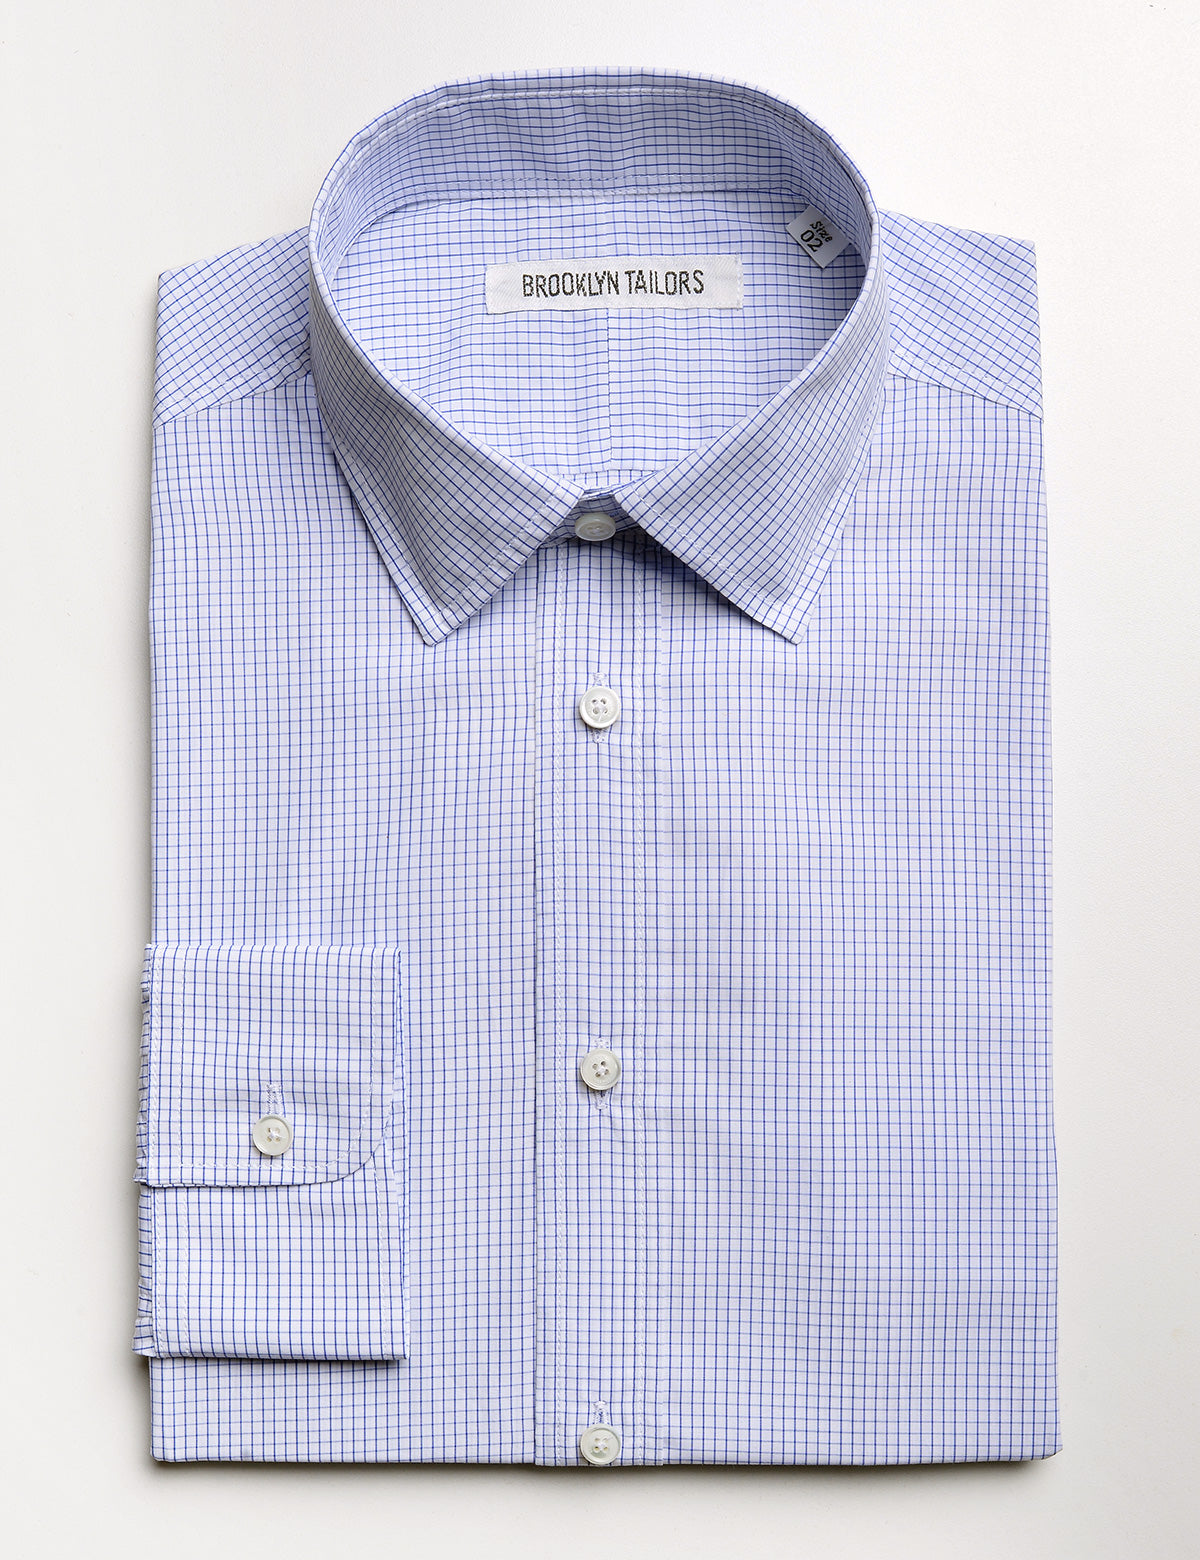 Brooklyn Tailors BKT20 Slim Dress Shirt in Graph Check - White & Blue flat folded shot